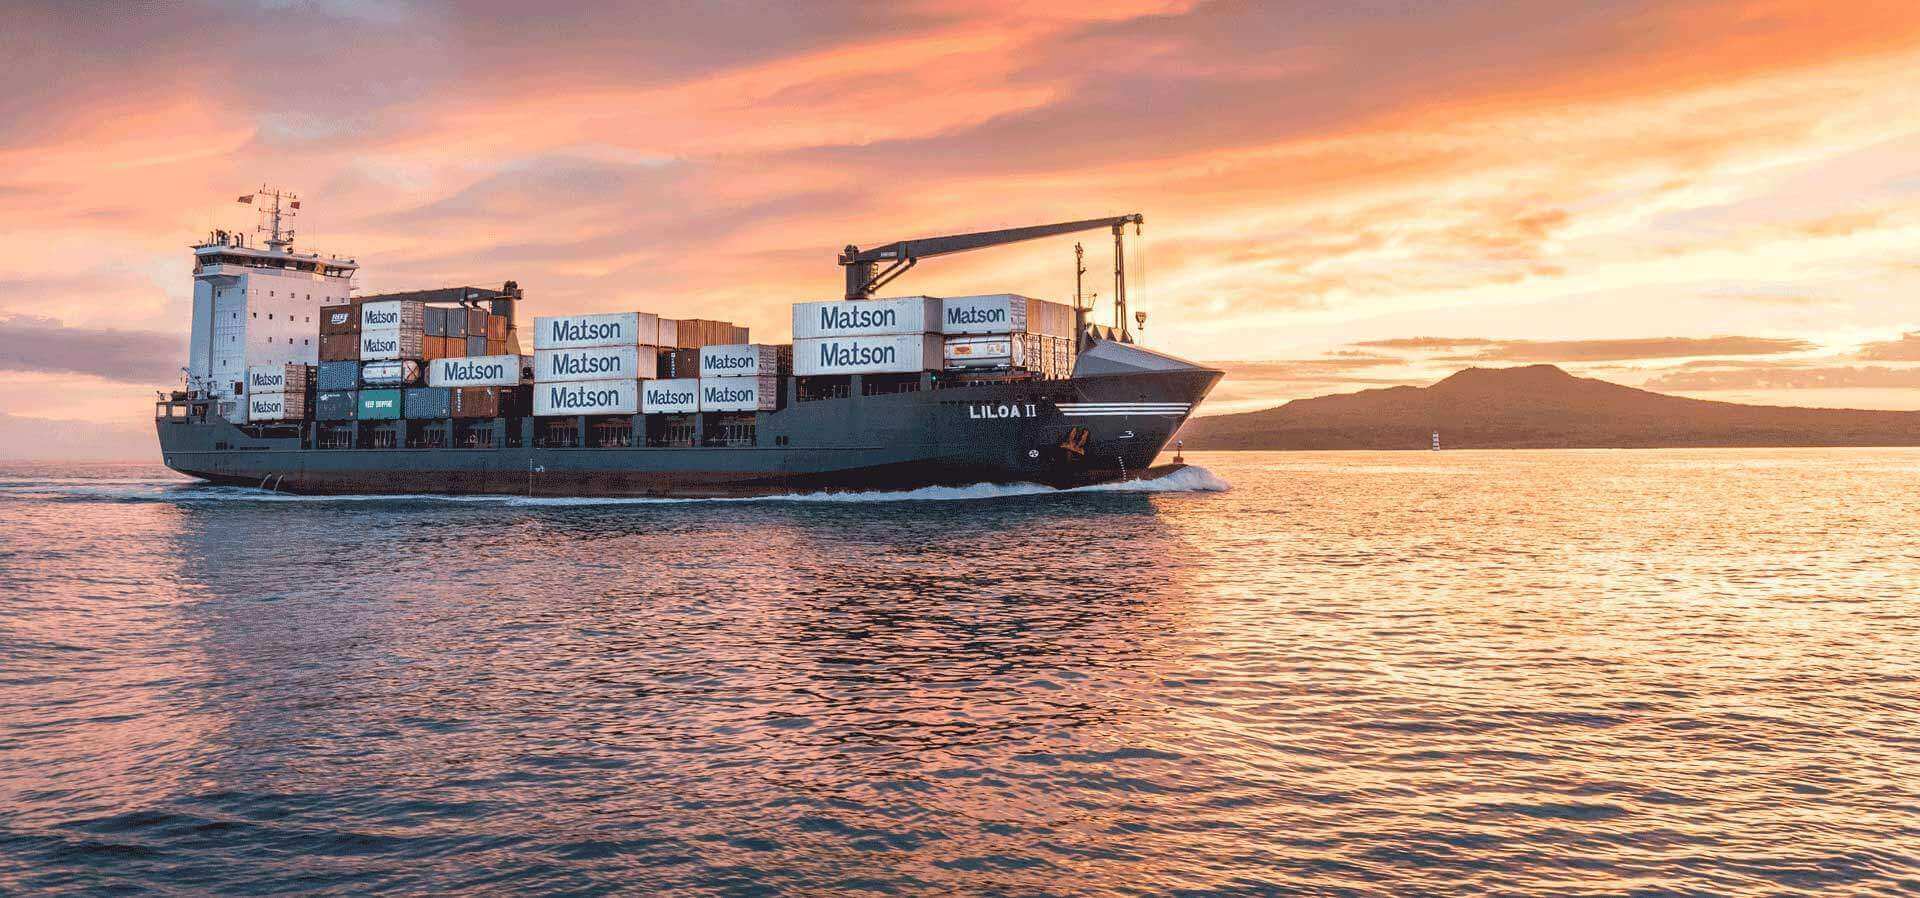 hg体育集装箱船“利罗亚二号”向南hg体育官网运送集装箱.